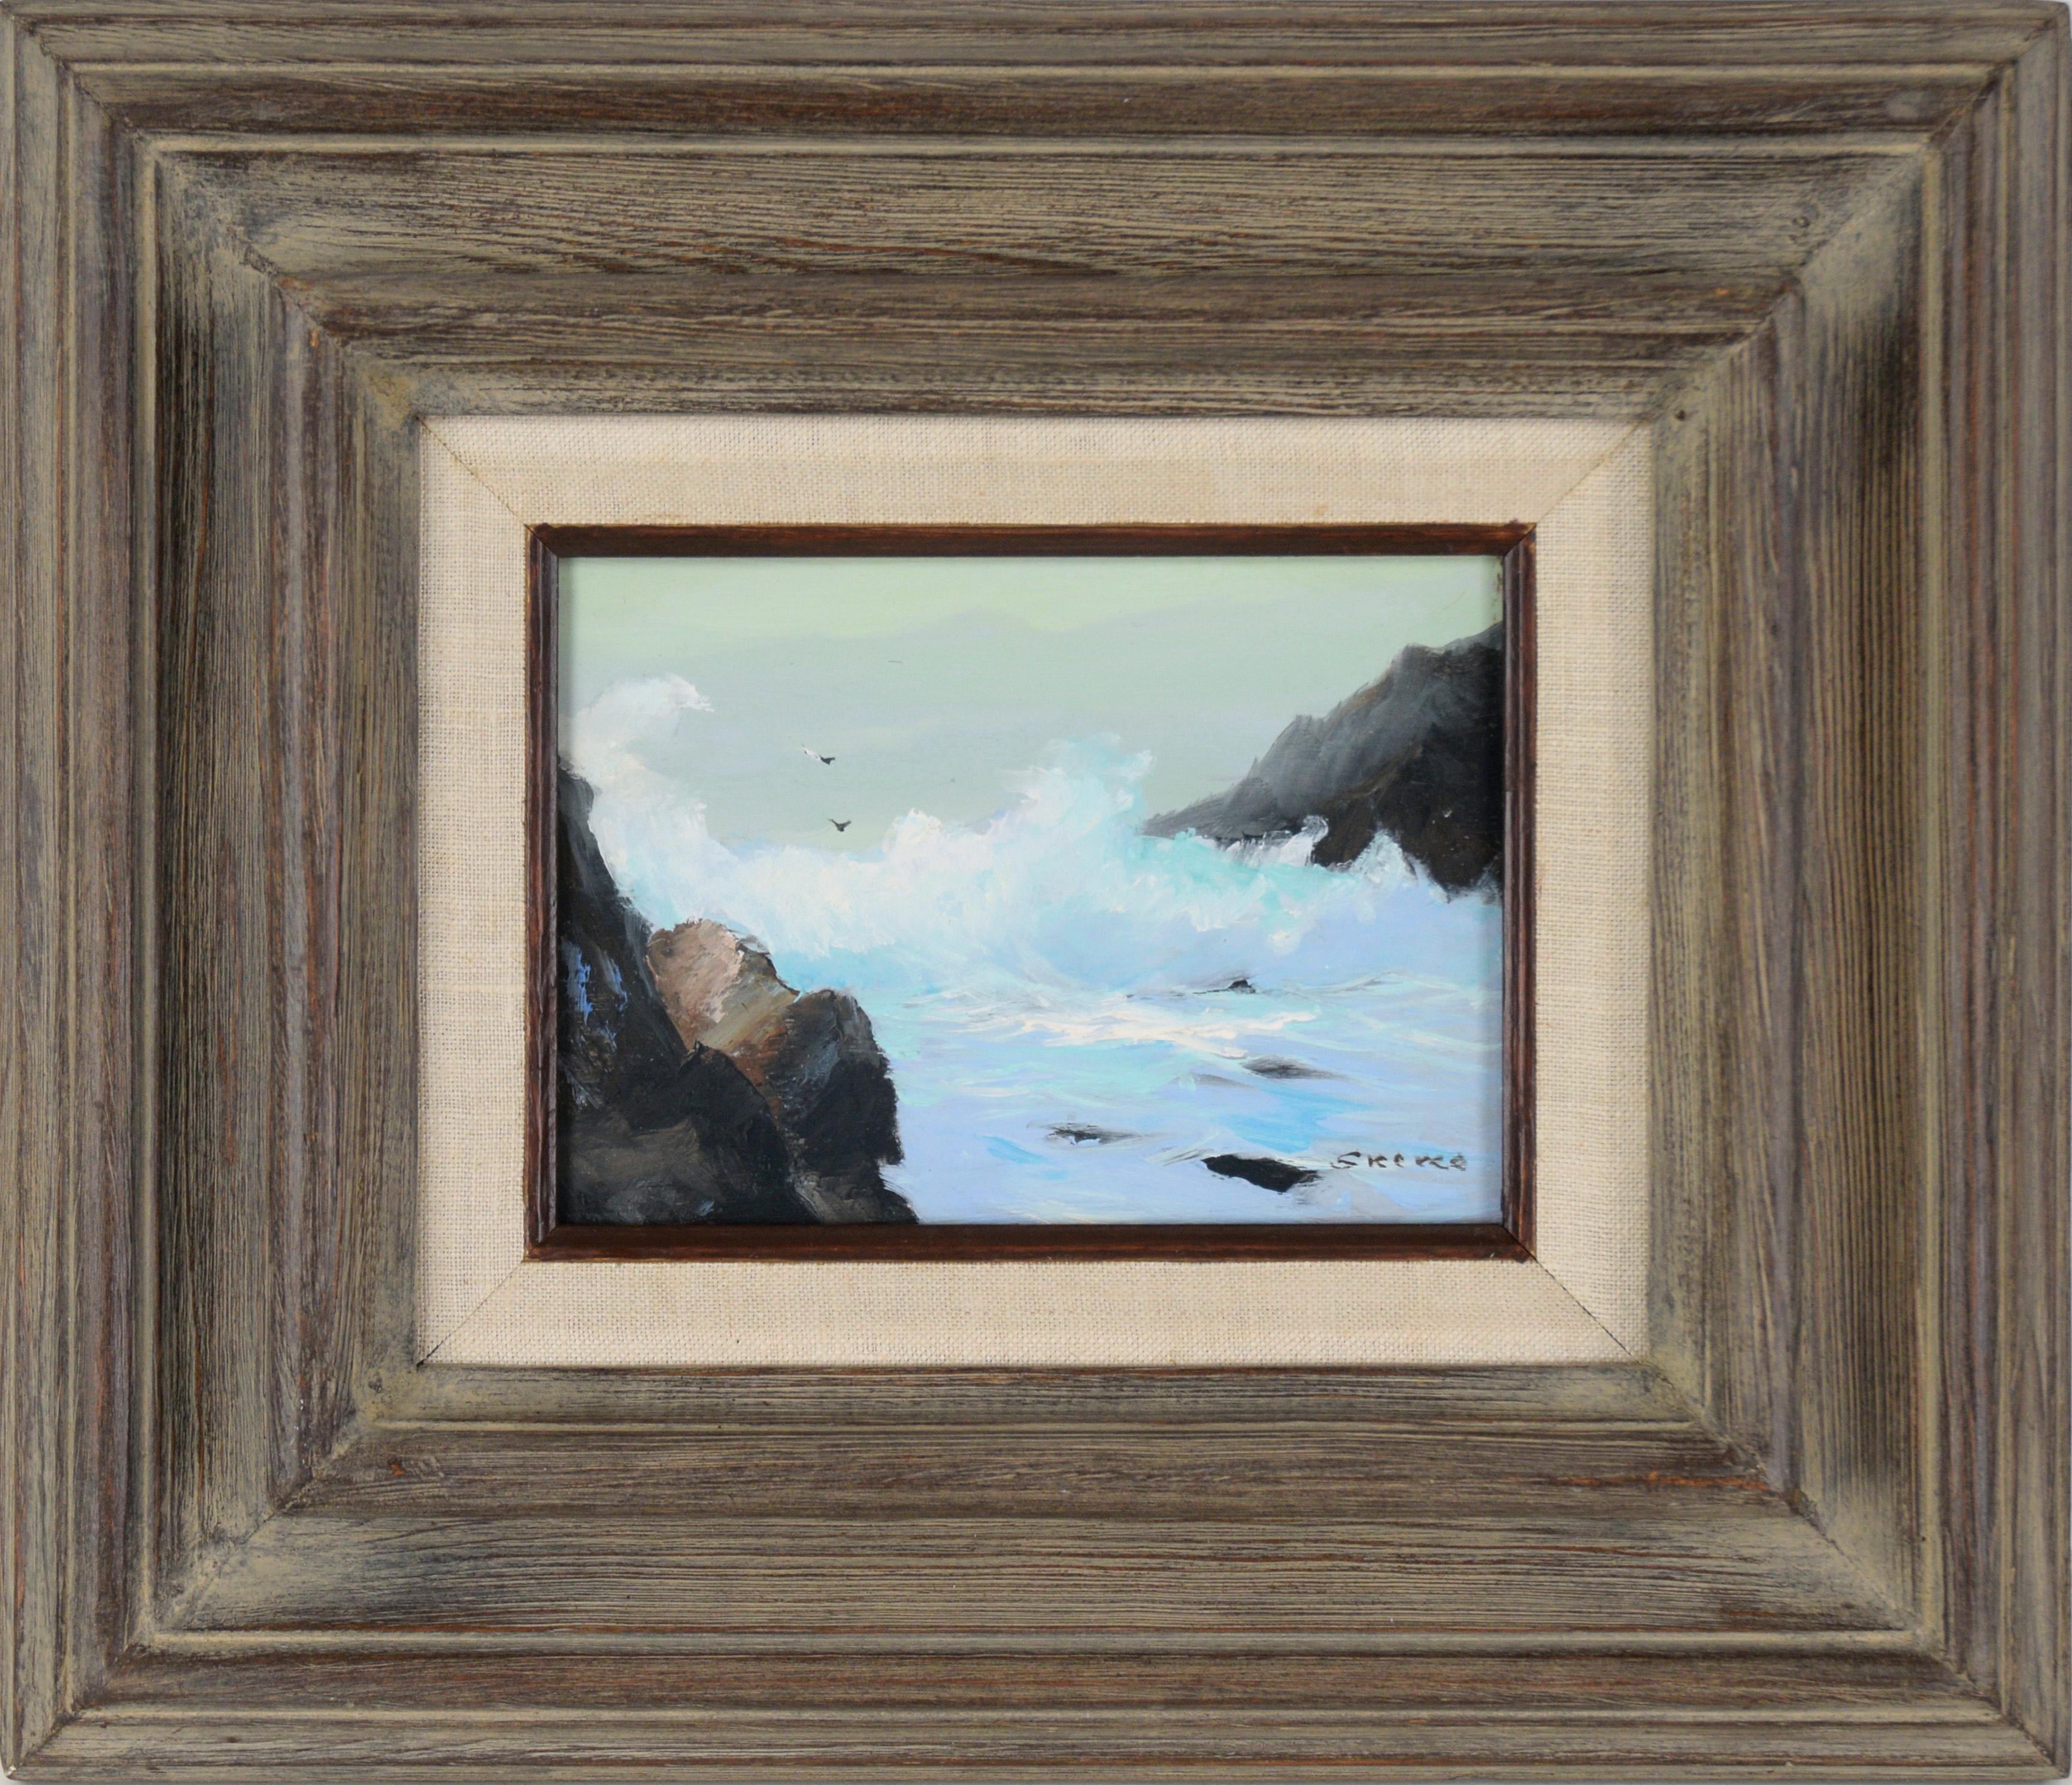 Stephen John Skerce Landscape Art - Crashing Waves - Big Sur Coastal Cove Original Oil on Masonite